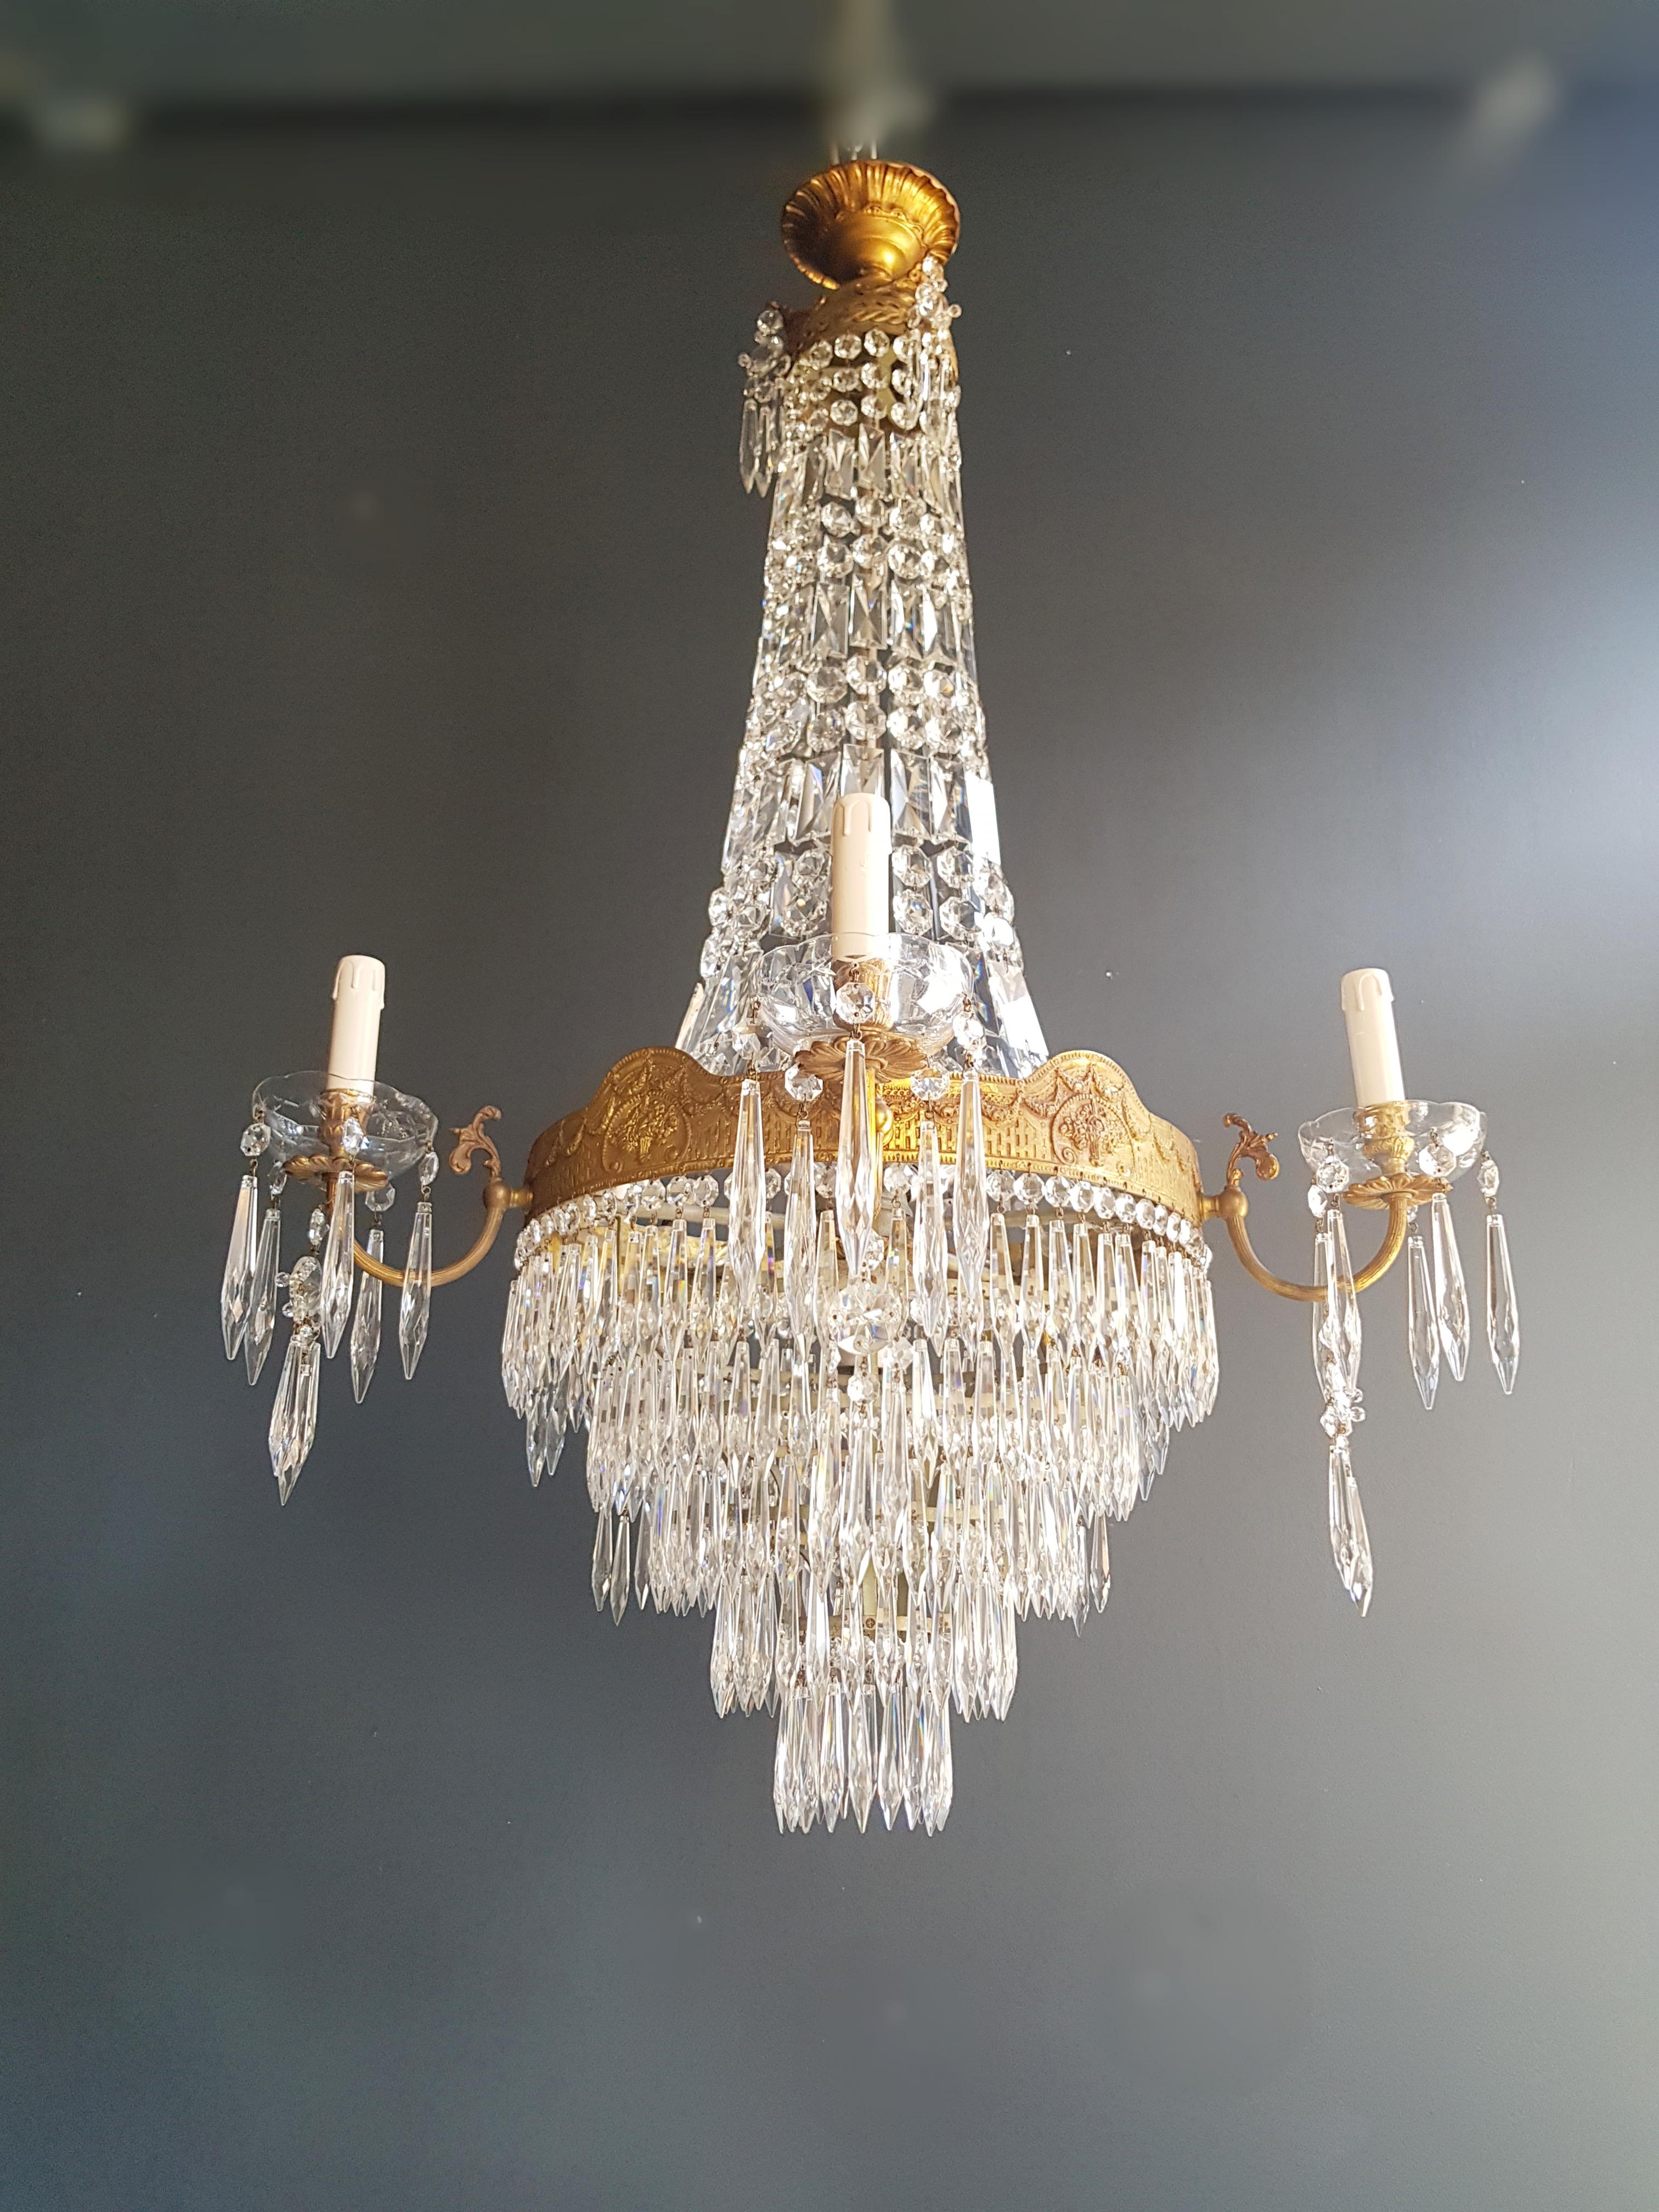 Montgolfiè Empire Sac a Pearl Chandelier Crystal Lustre Ceiling Lamp Antique WoW 1